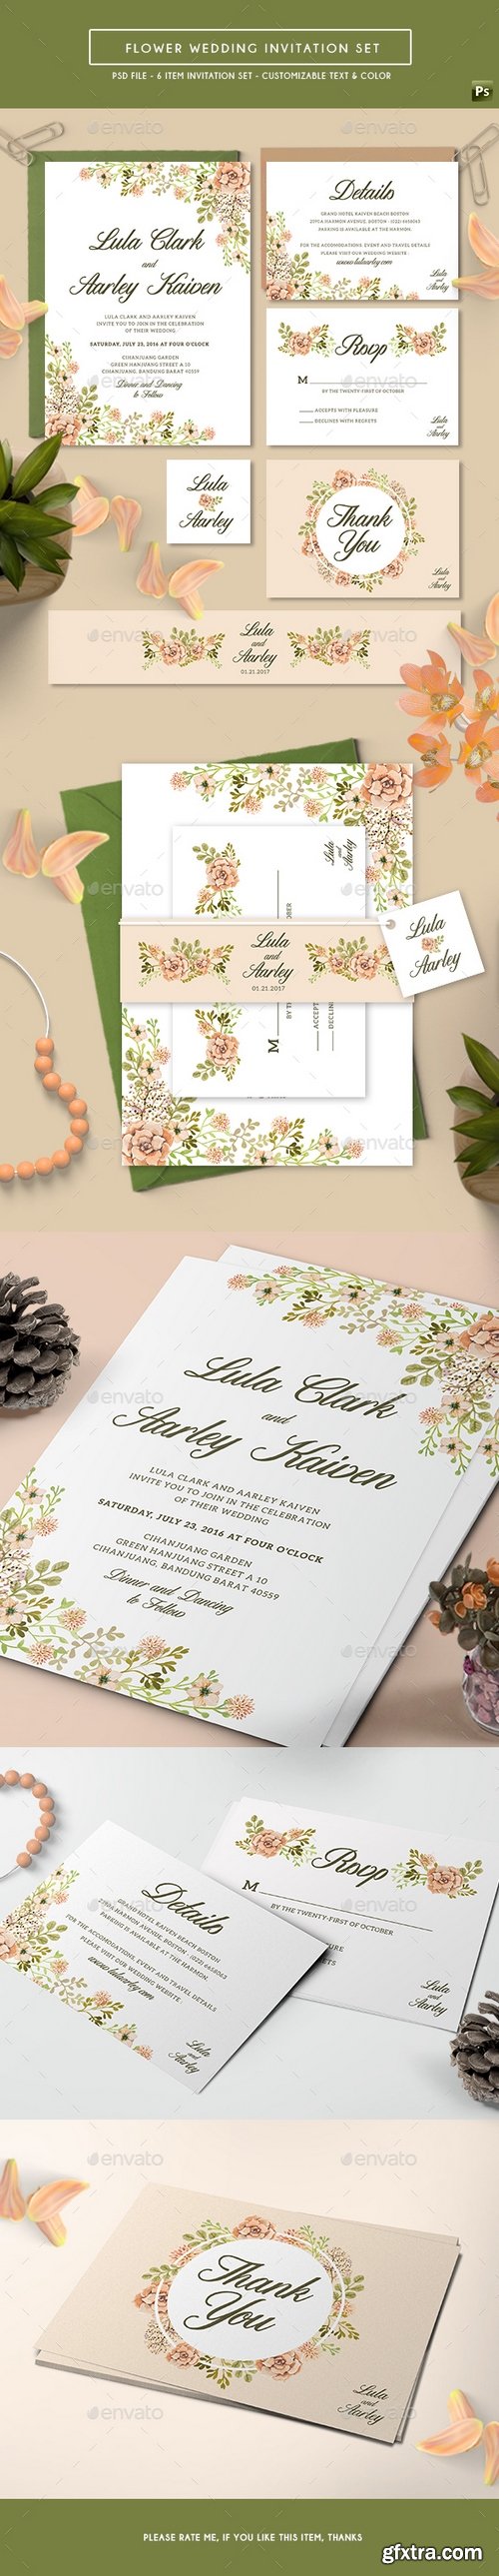 Graphicriver - Flower Wedding Invitation 17728315